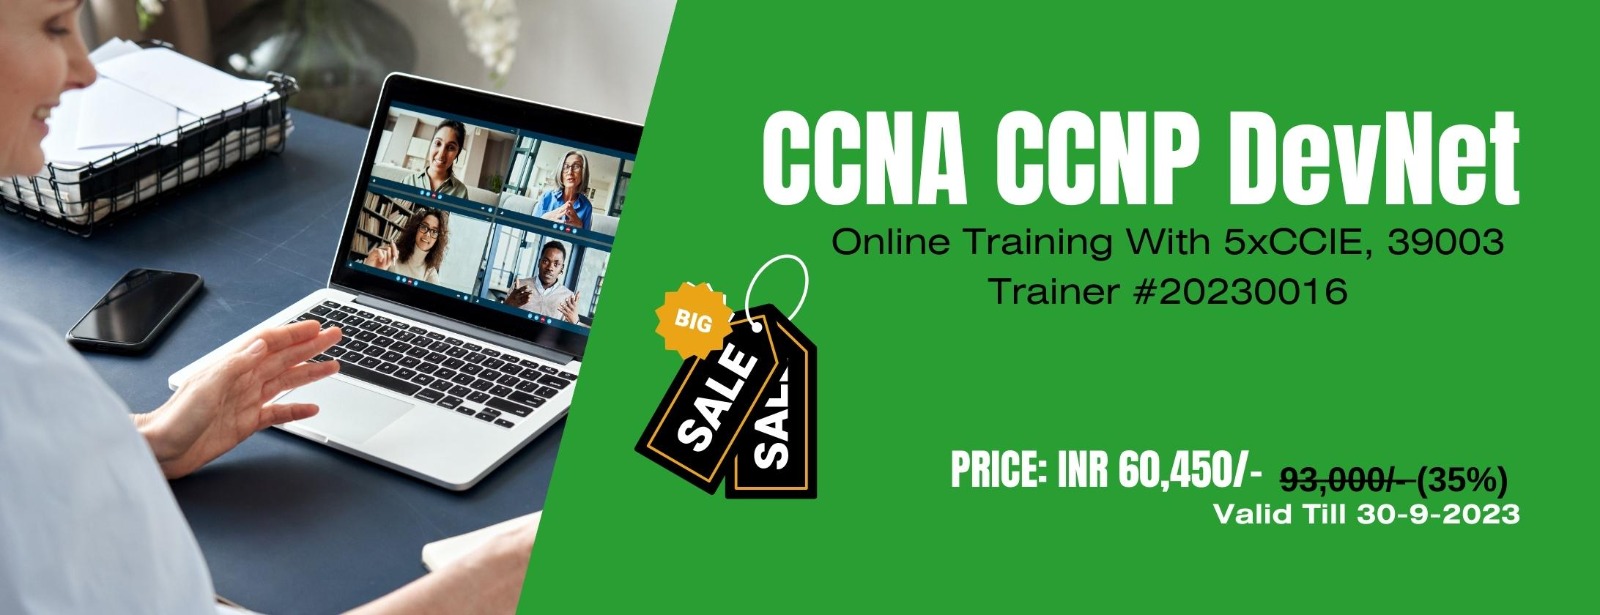 CCIE Service Provider Online Training